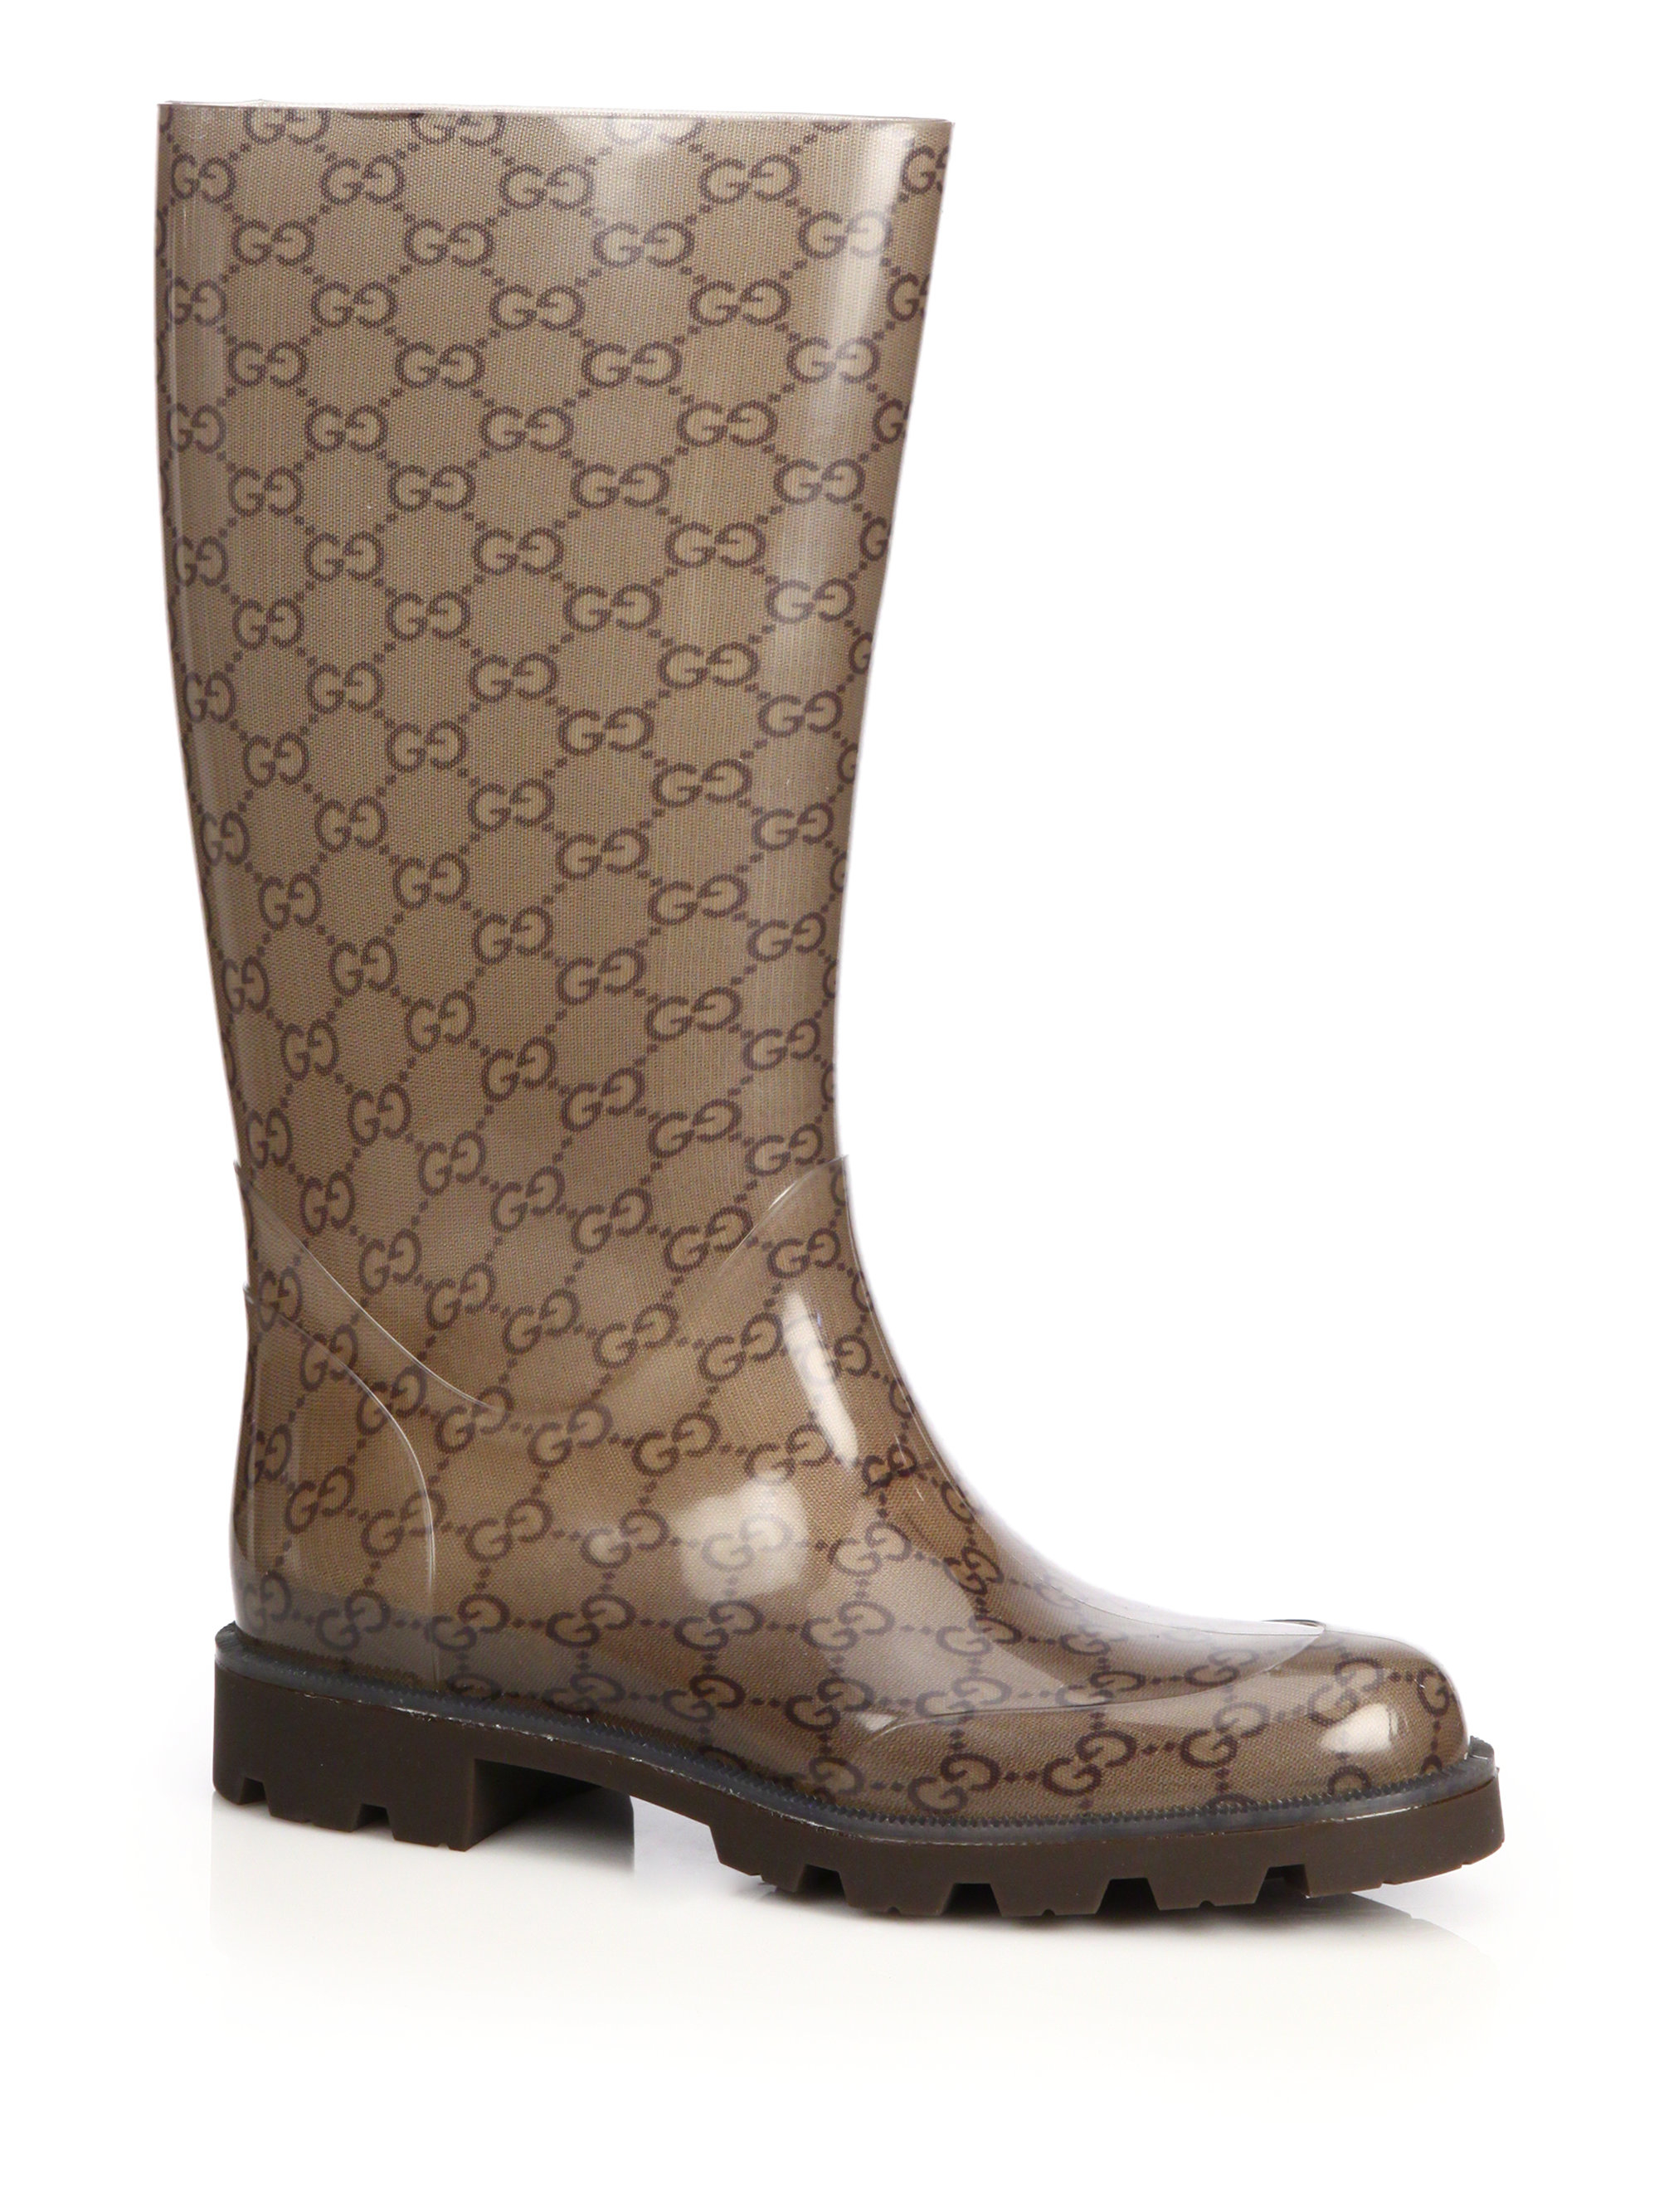 Gucci Edimburg Gg Boots in Brown - Lyst